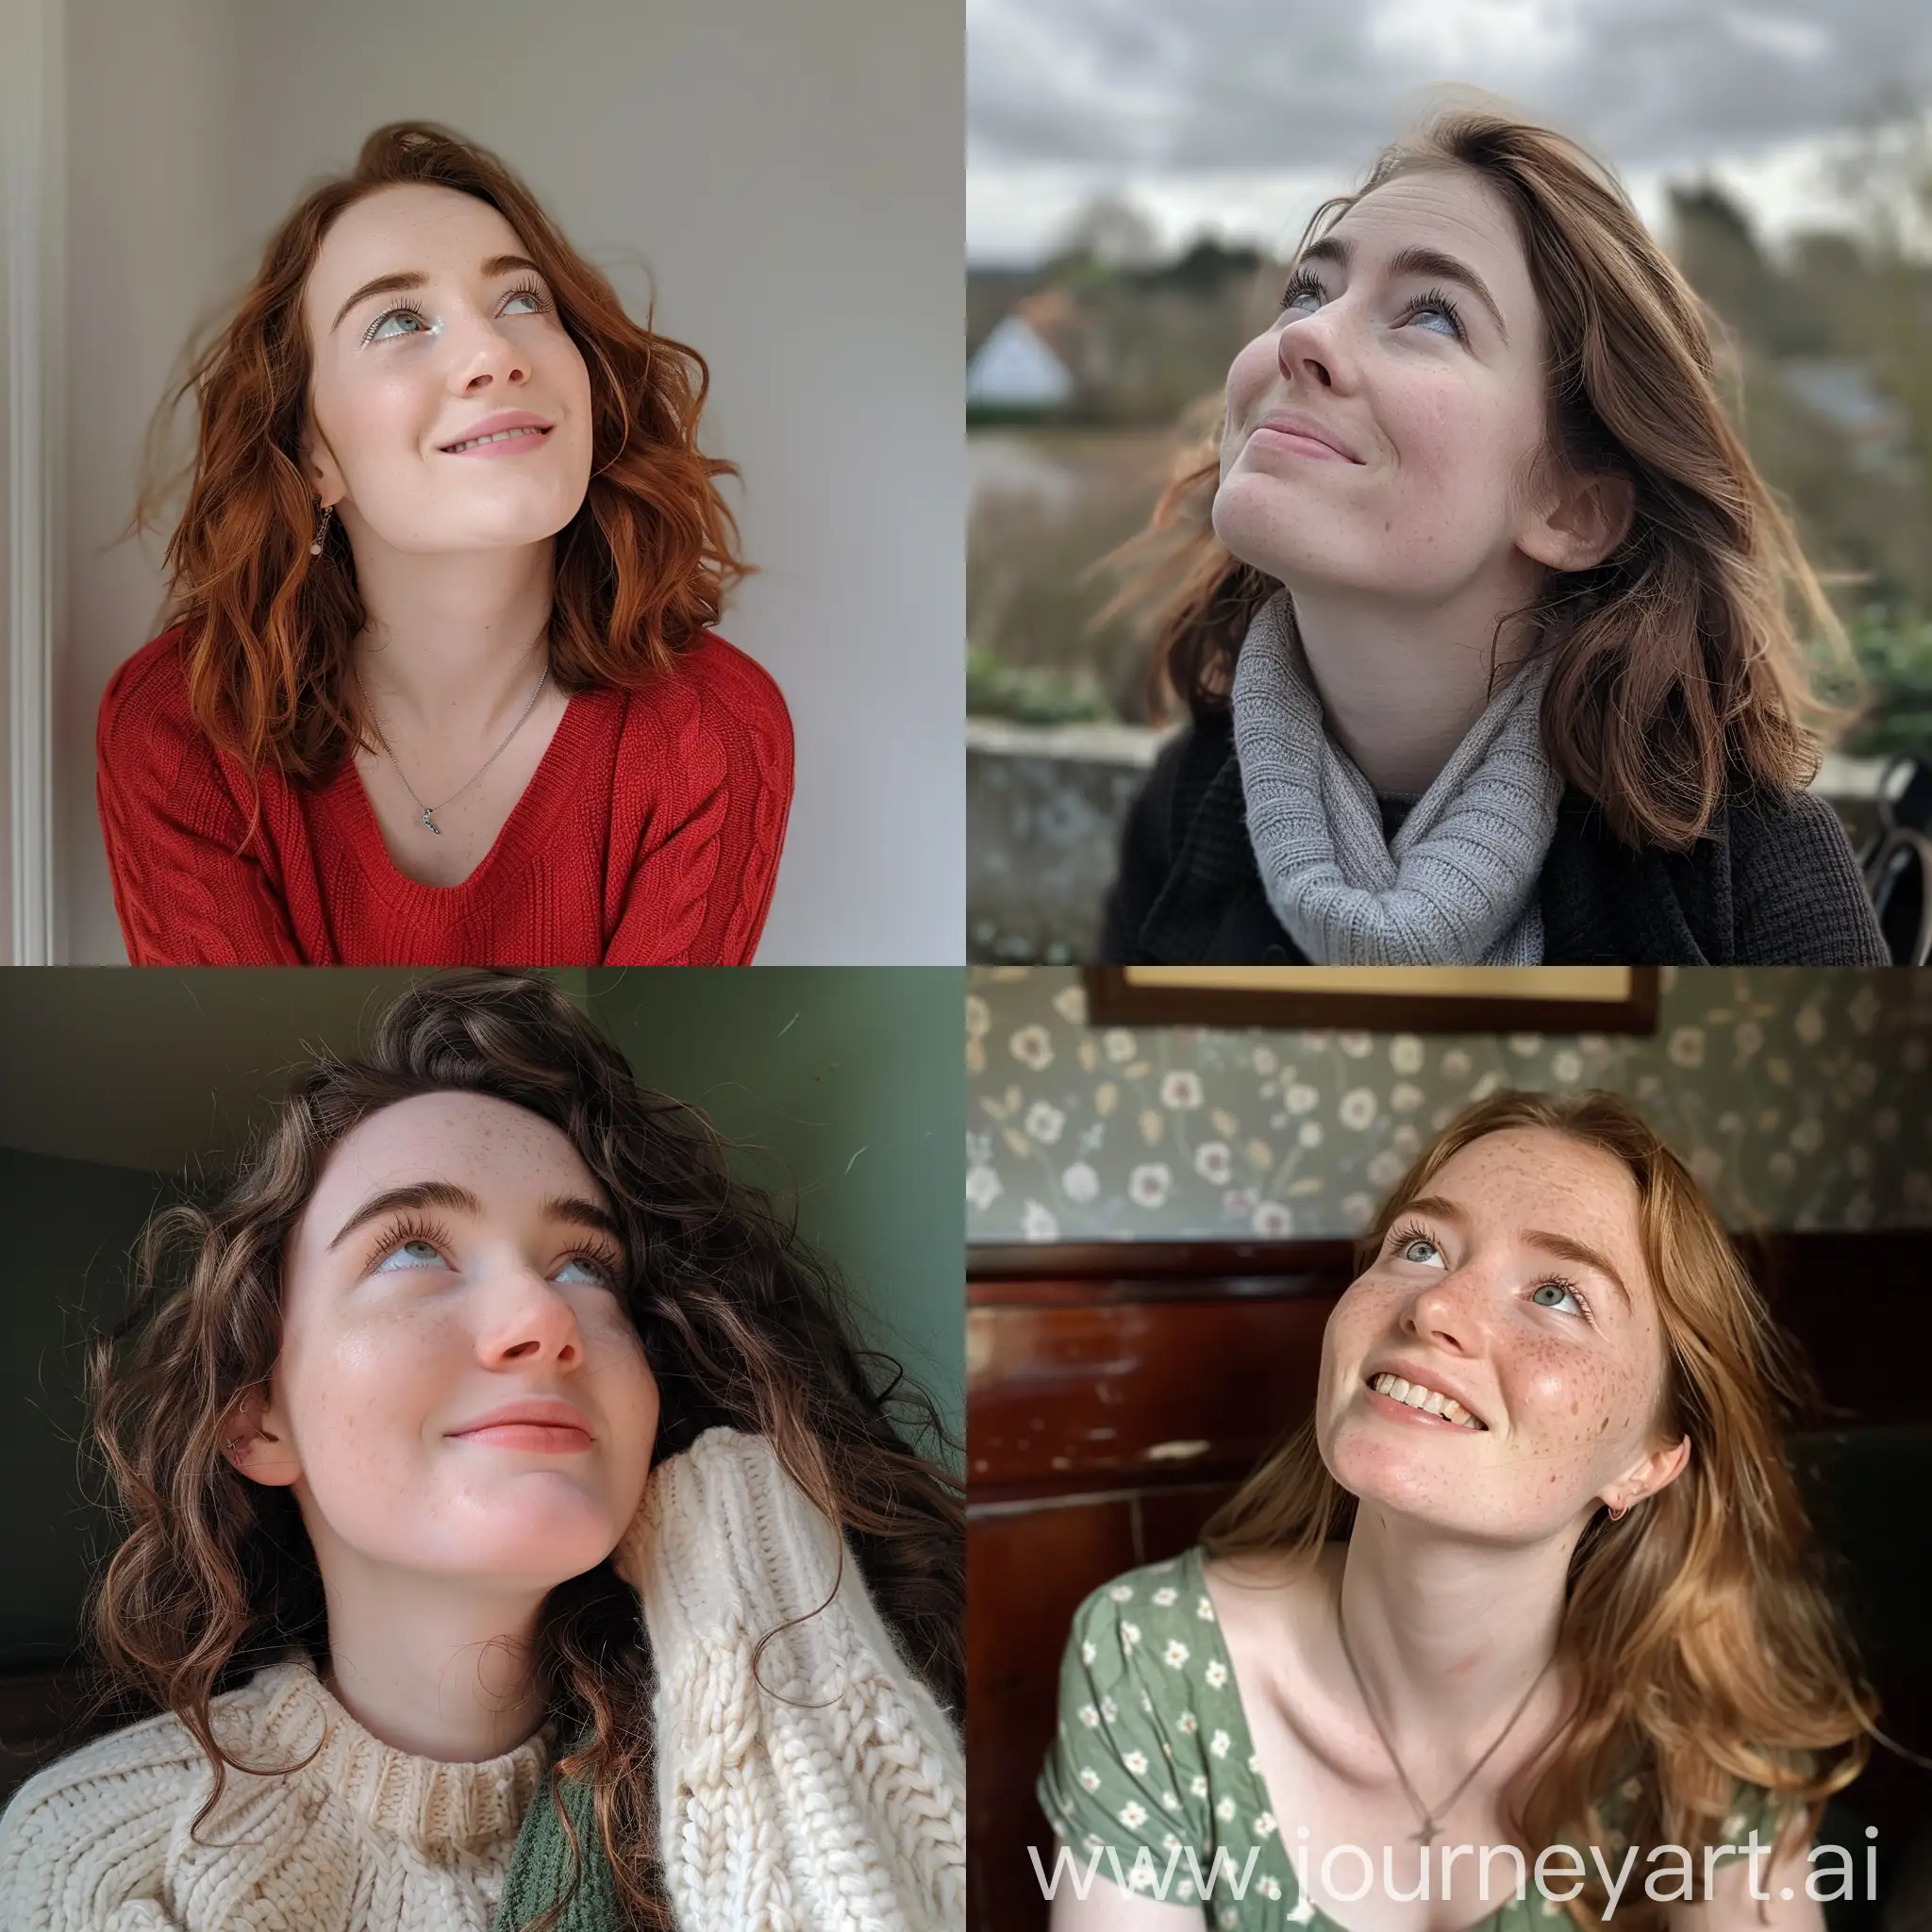 23 year old Irish girl looking up smiling 